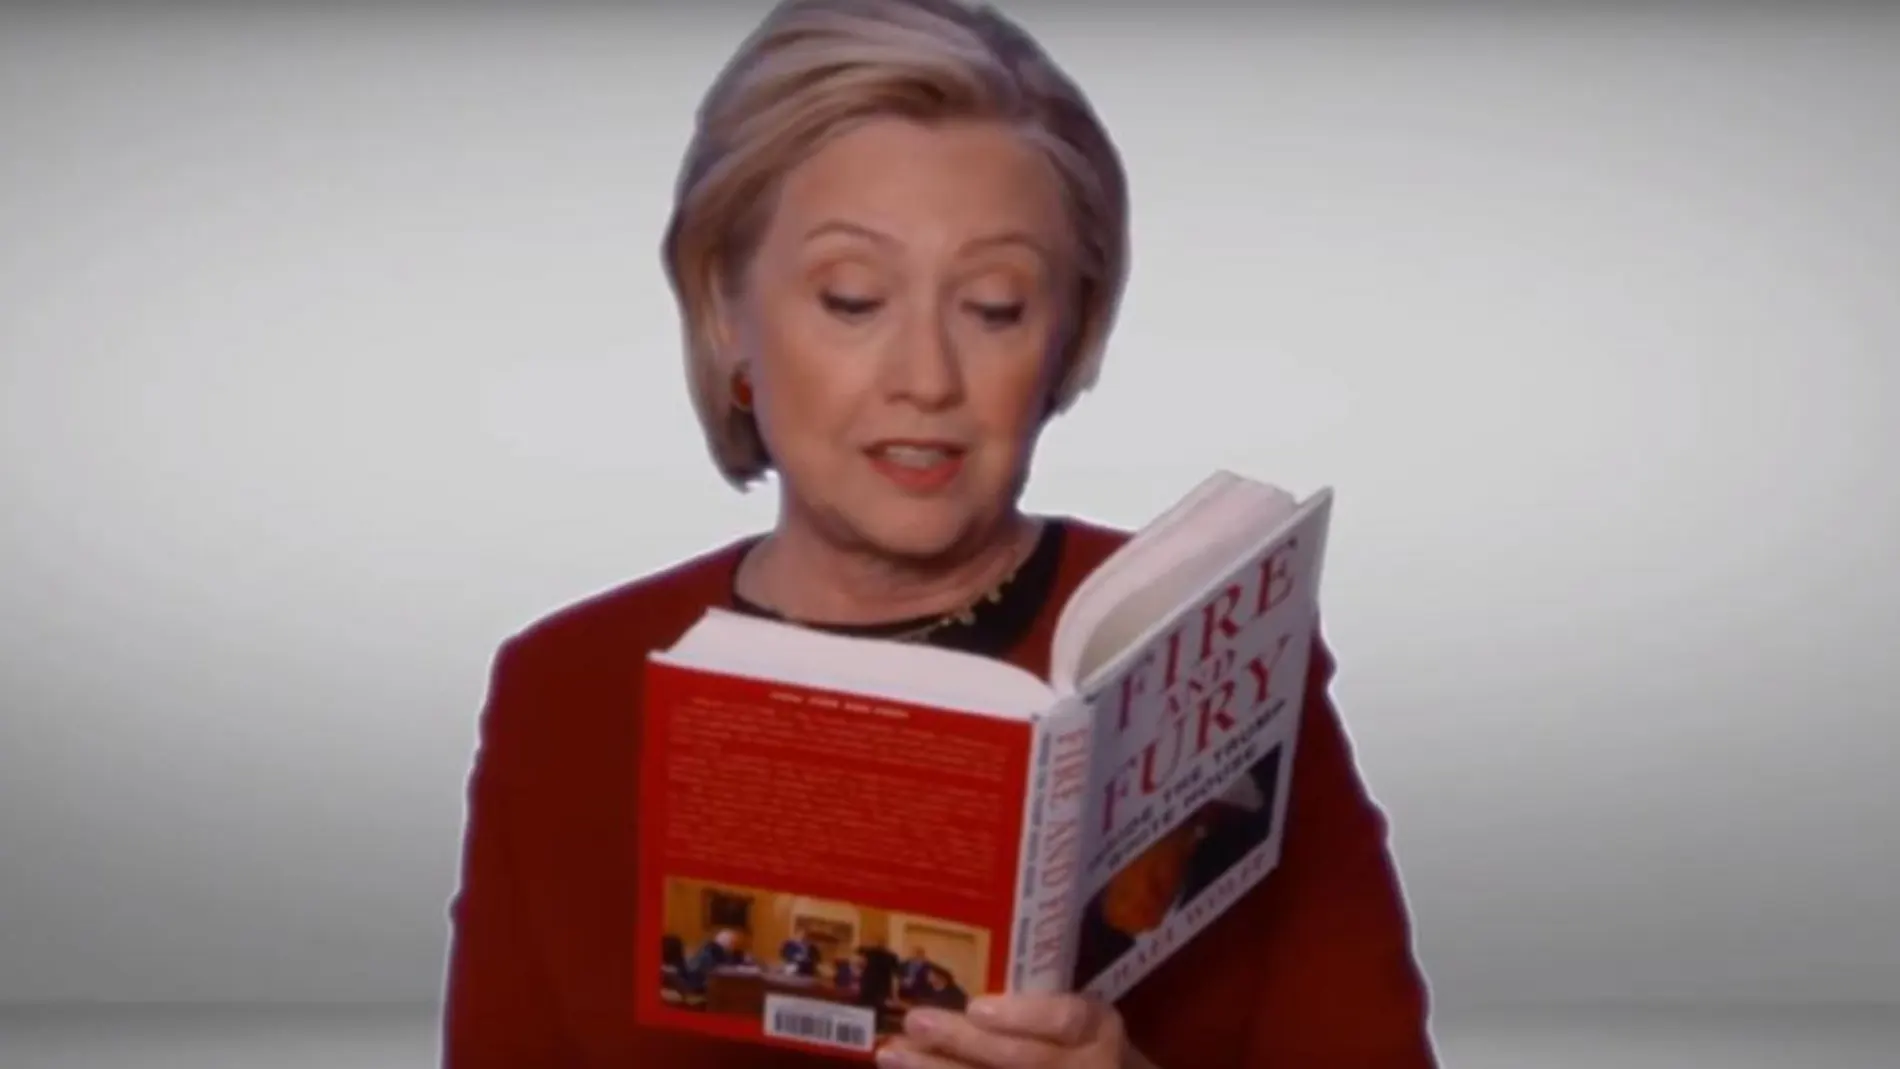 Hillary Clinton lee un fragmento del libro "Fire and Fury"